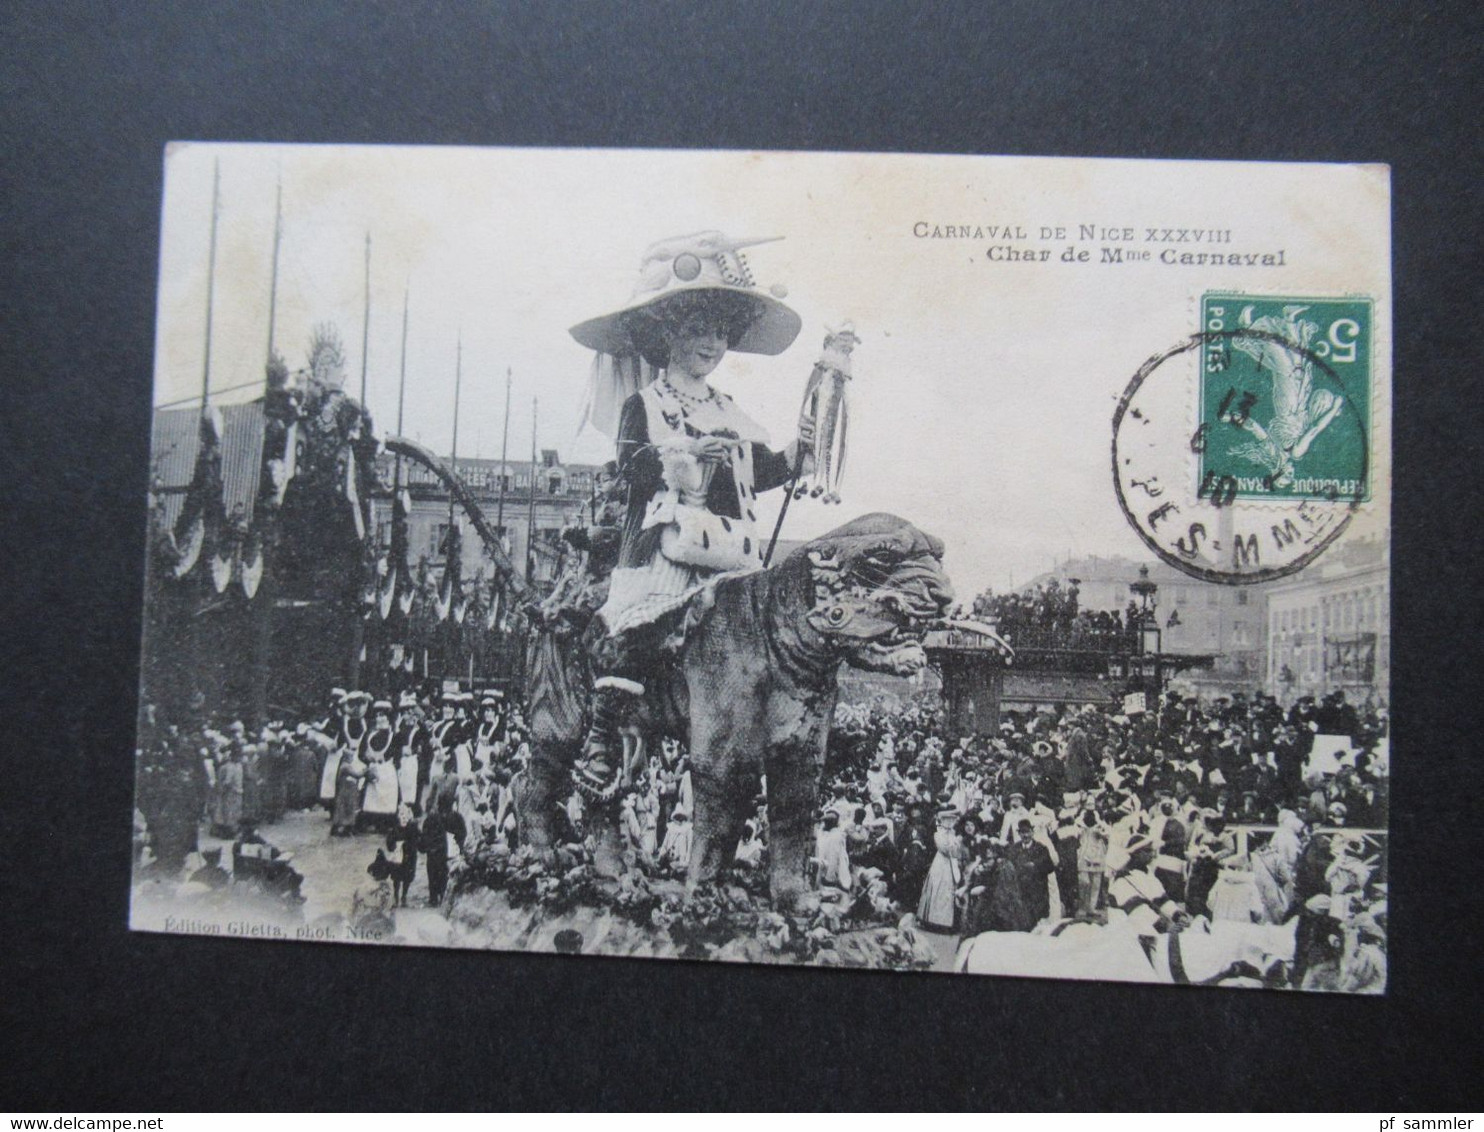 Frankreich 1910 AK Bildseitig Frankiert Fasching / Karneval Carnaval De Nice XXXVIII Char De Mme Carnaval - Carnival